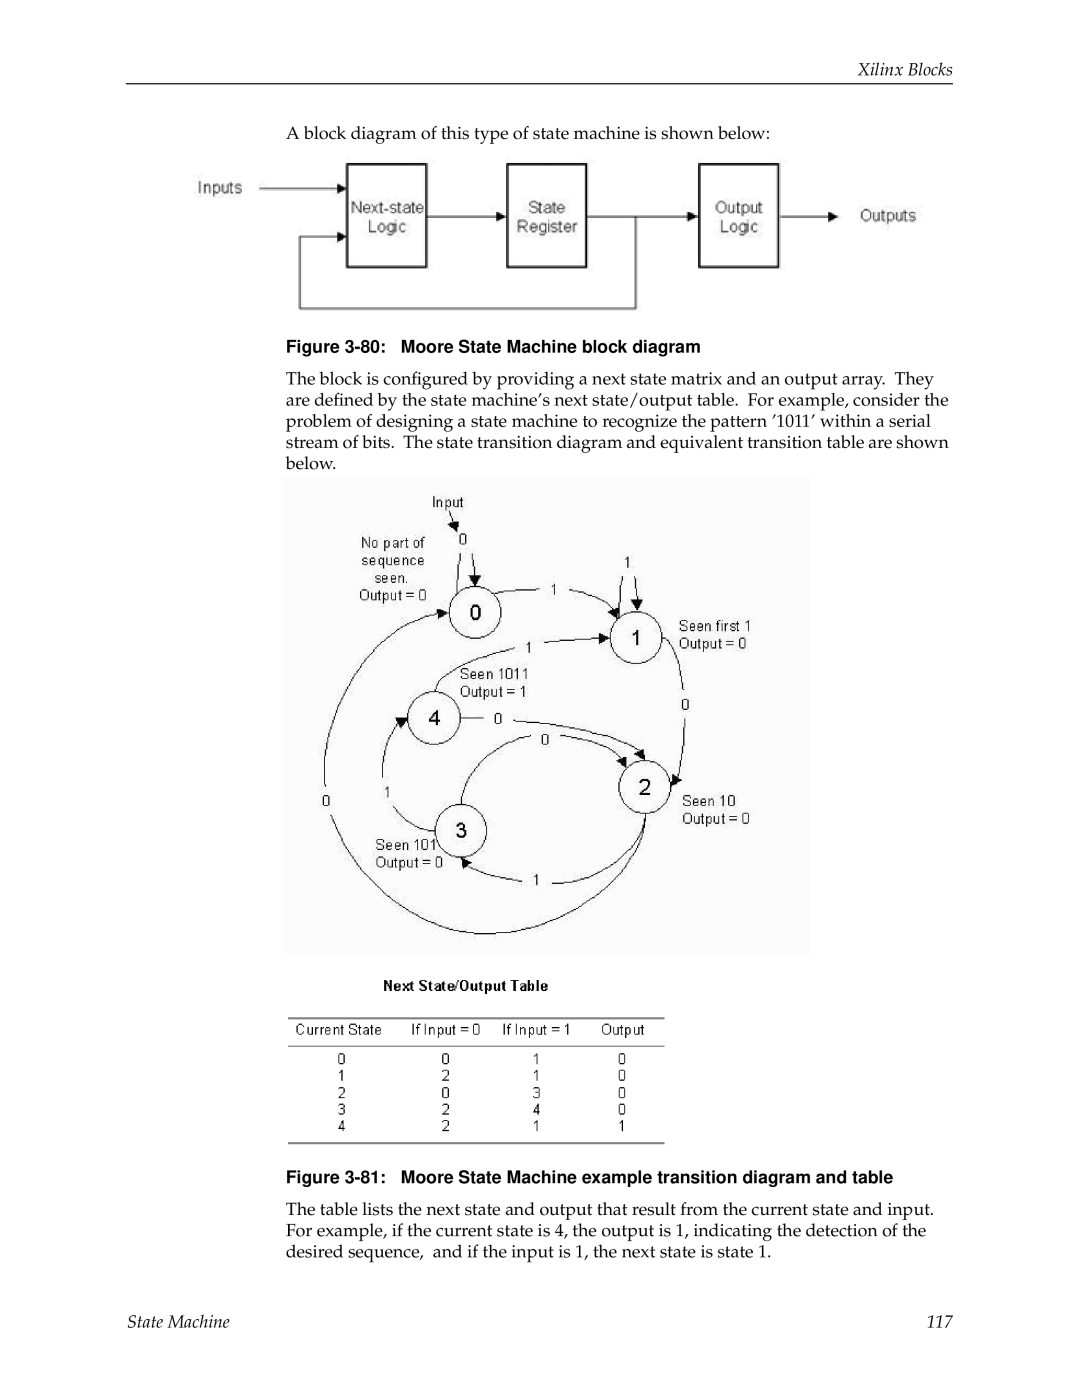 Xilinx V2.1 manual Xilinx Blocks, 80:Moore State Machine block diagram 